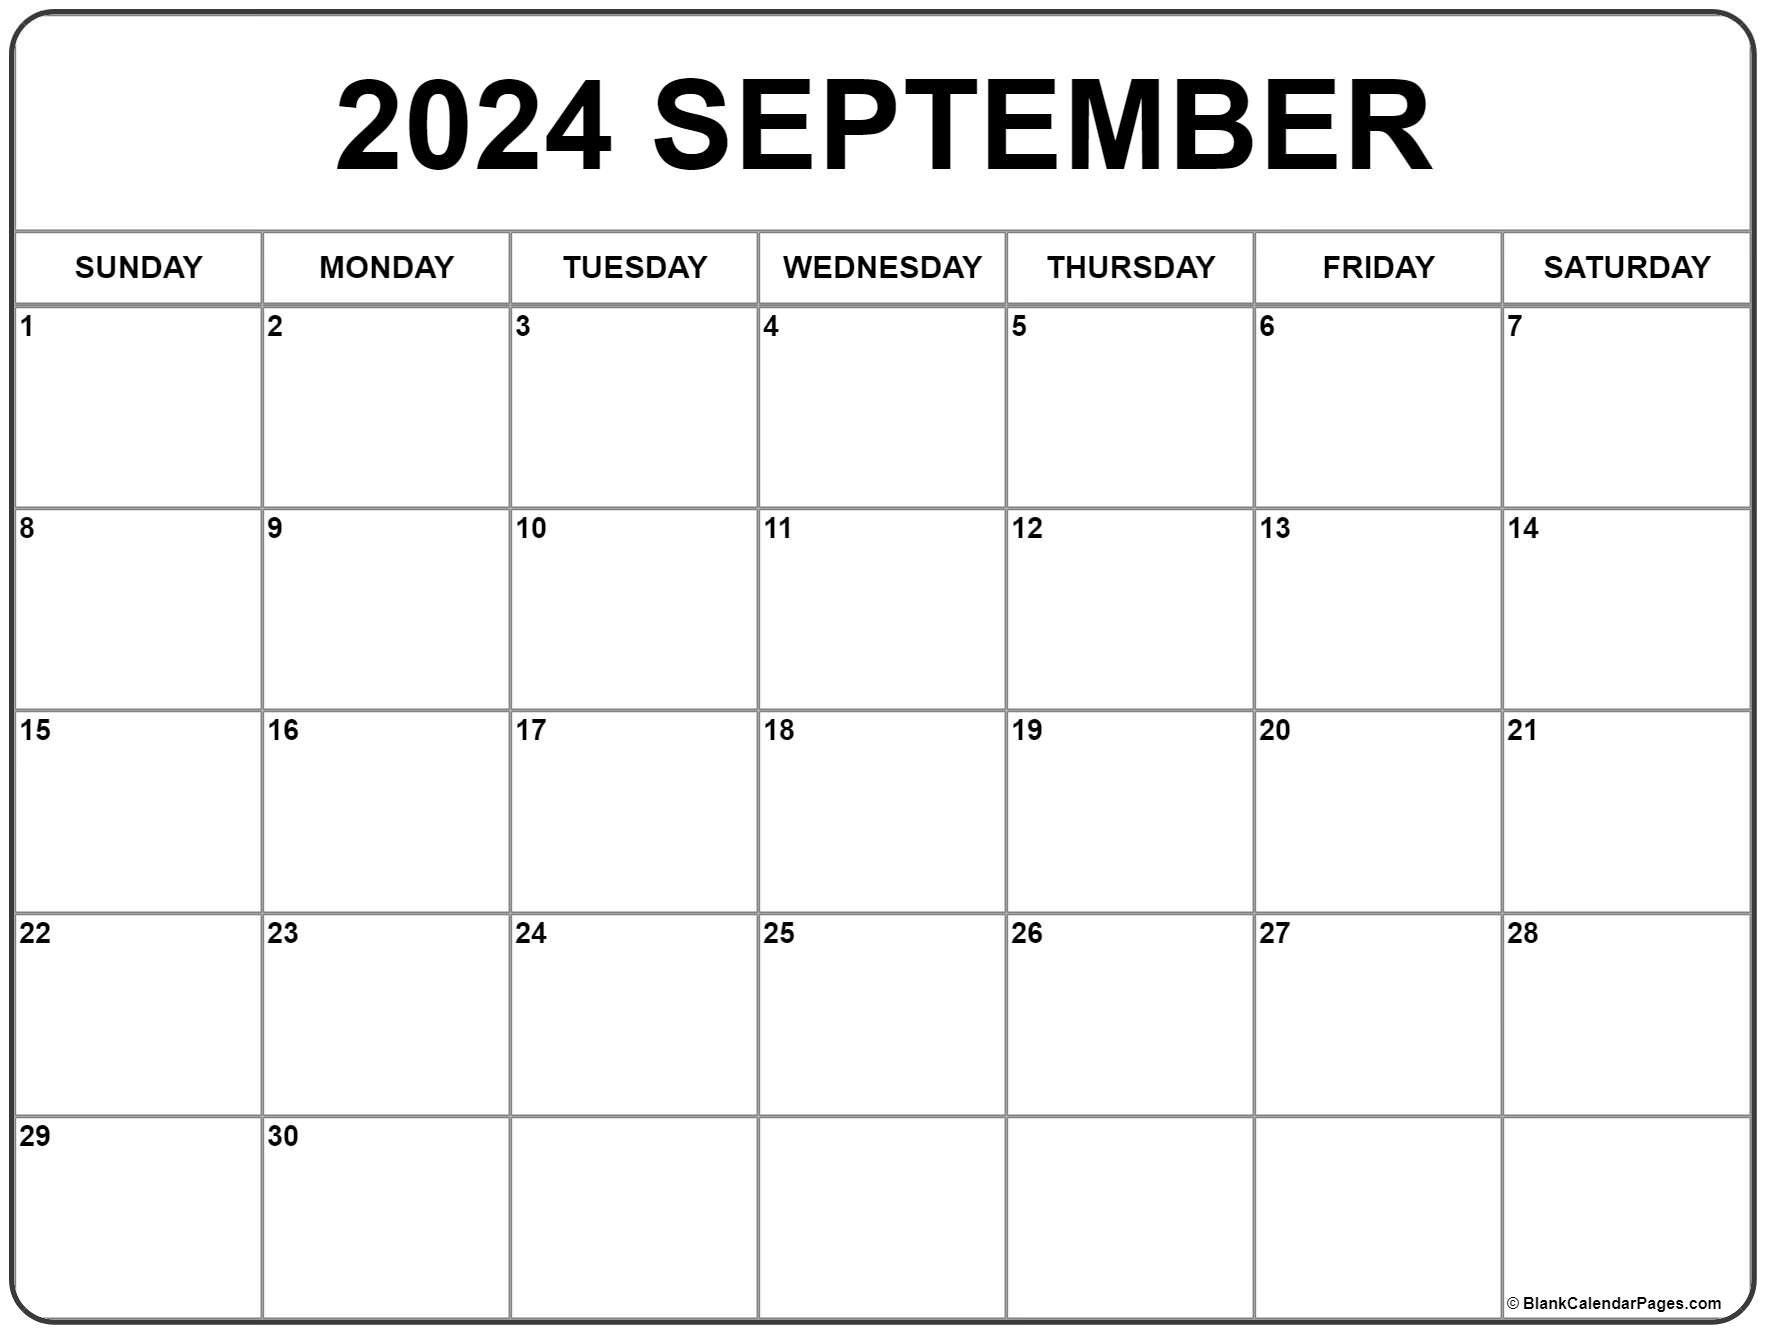 Calendar Template September 2021 September 2021 calendar | free printable monthly calendars